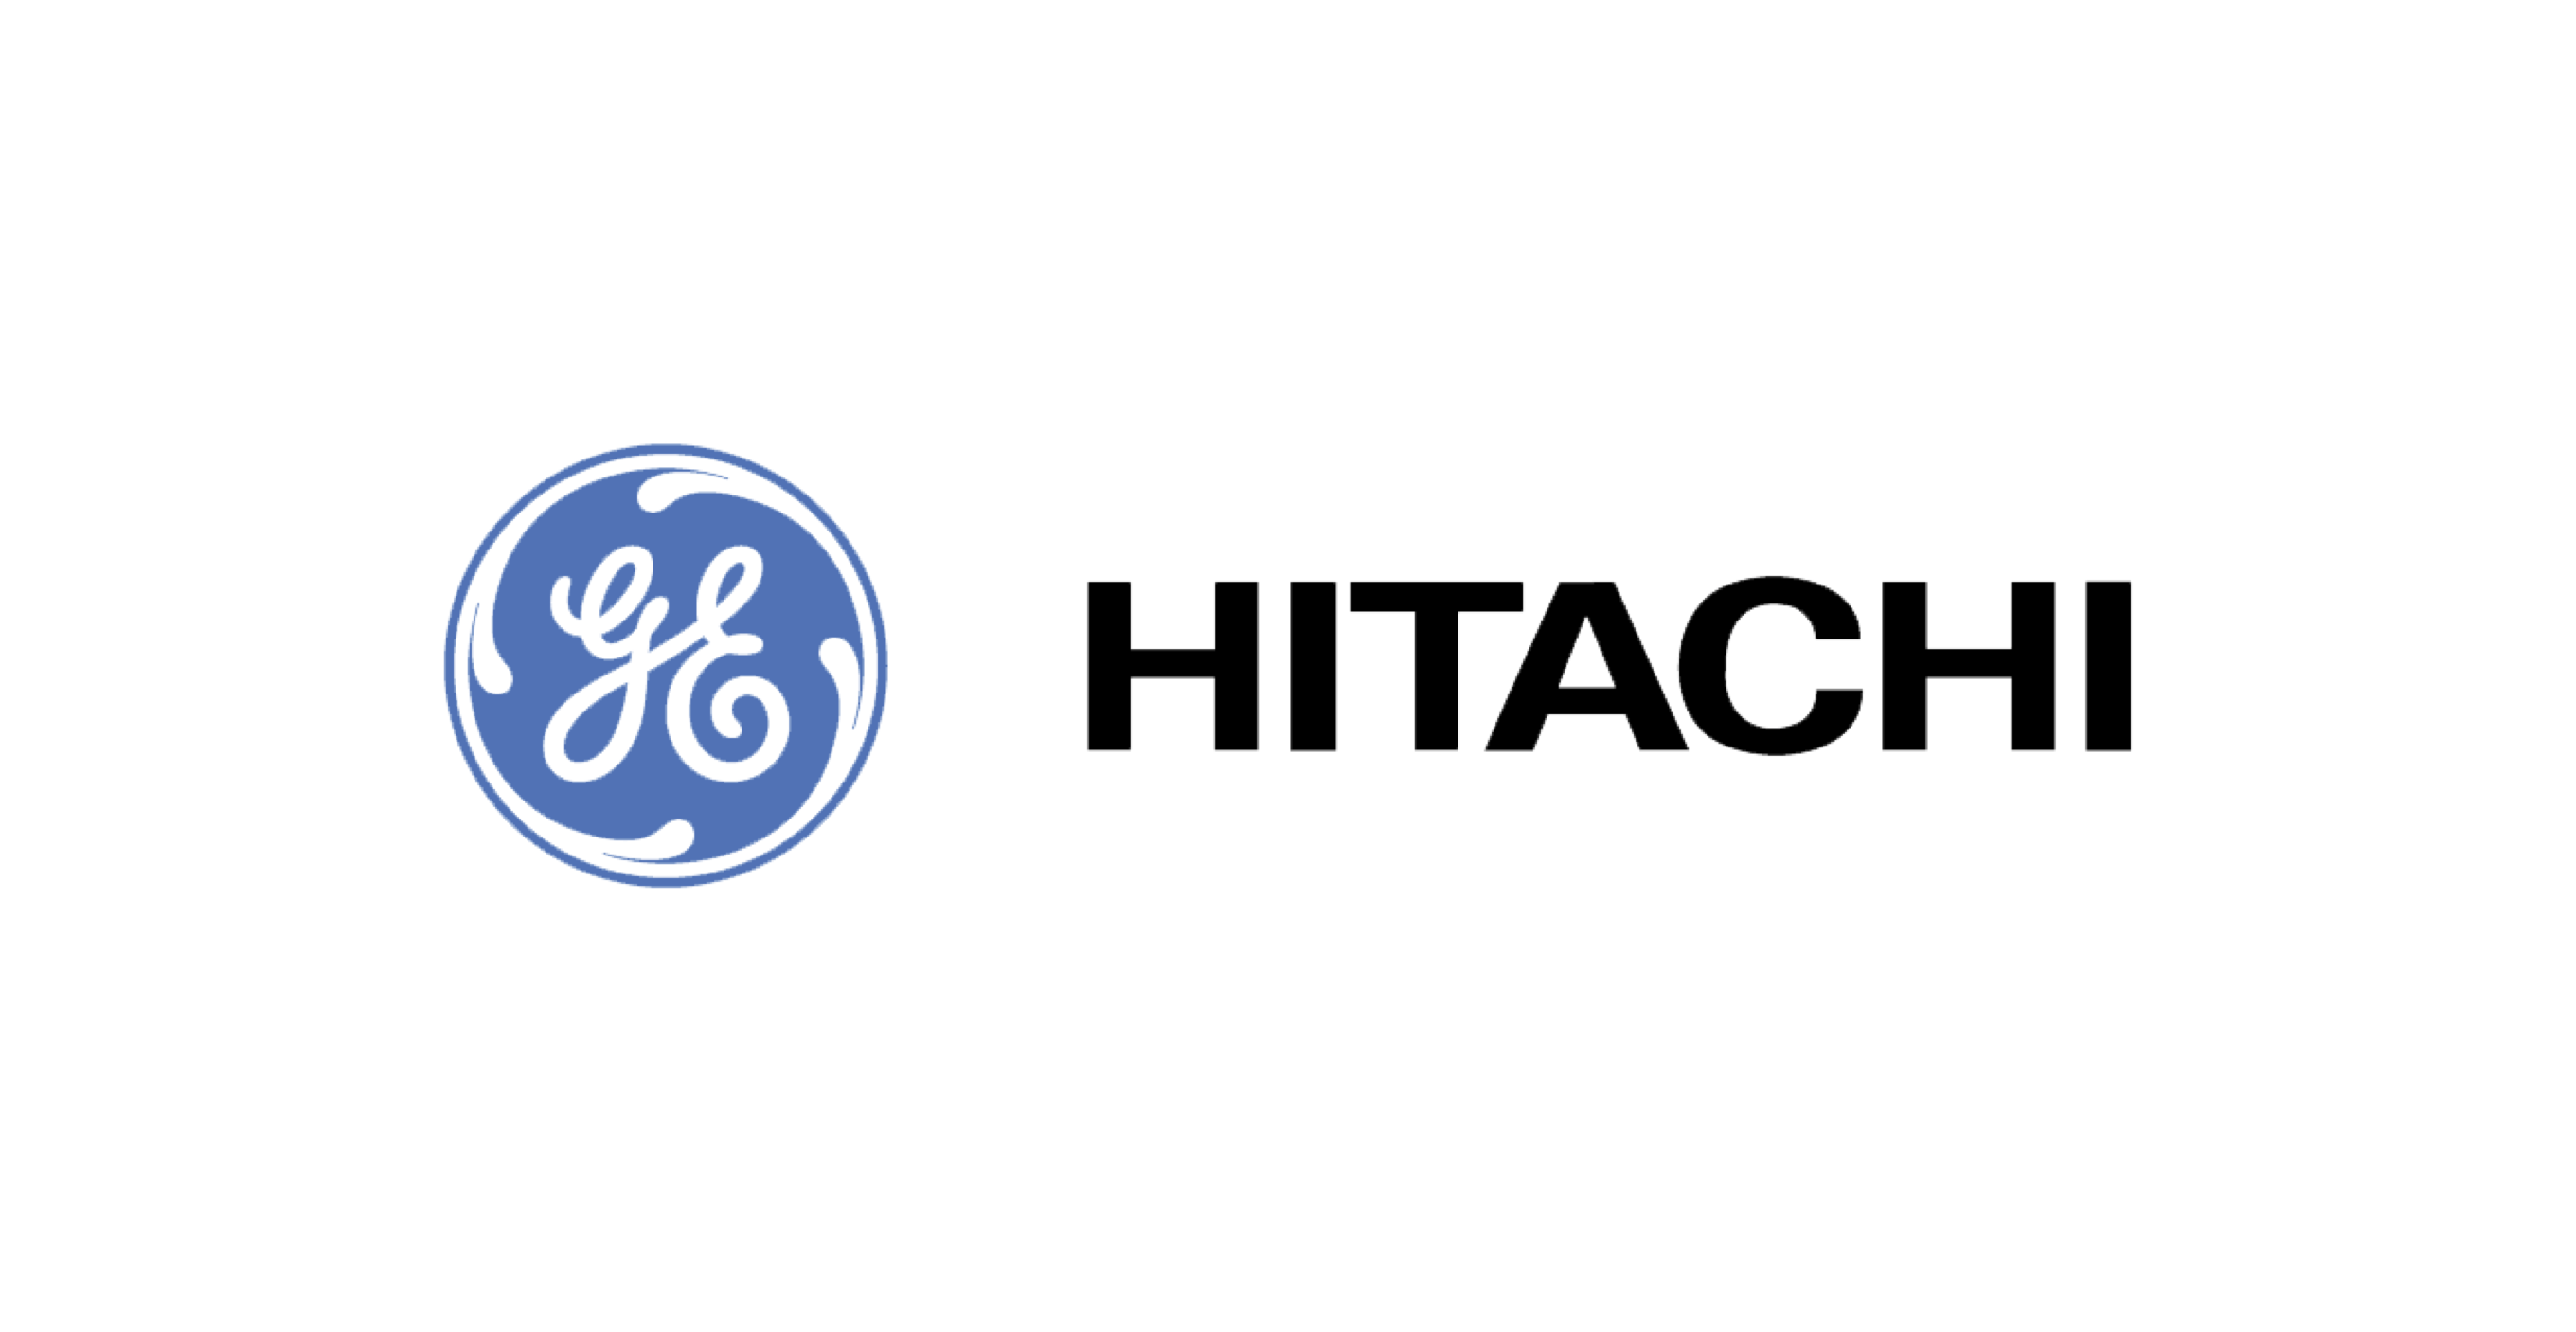 GE Hitachi Nuclear Energy